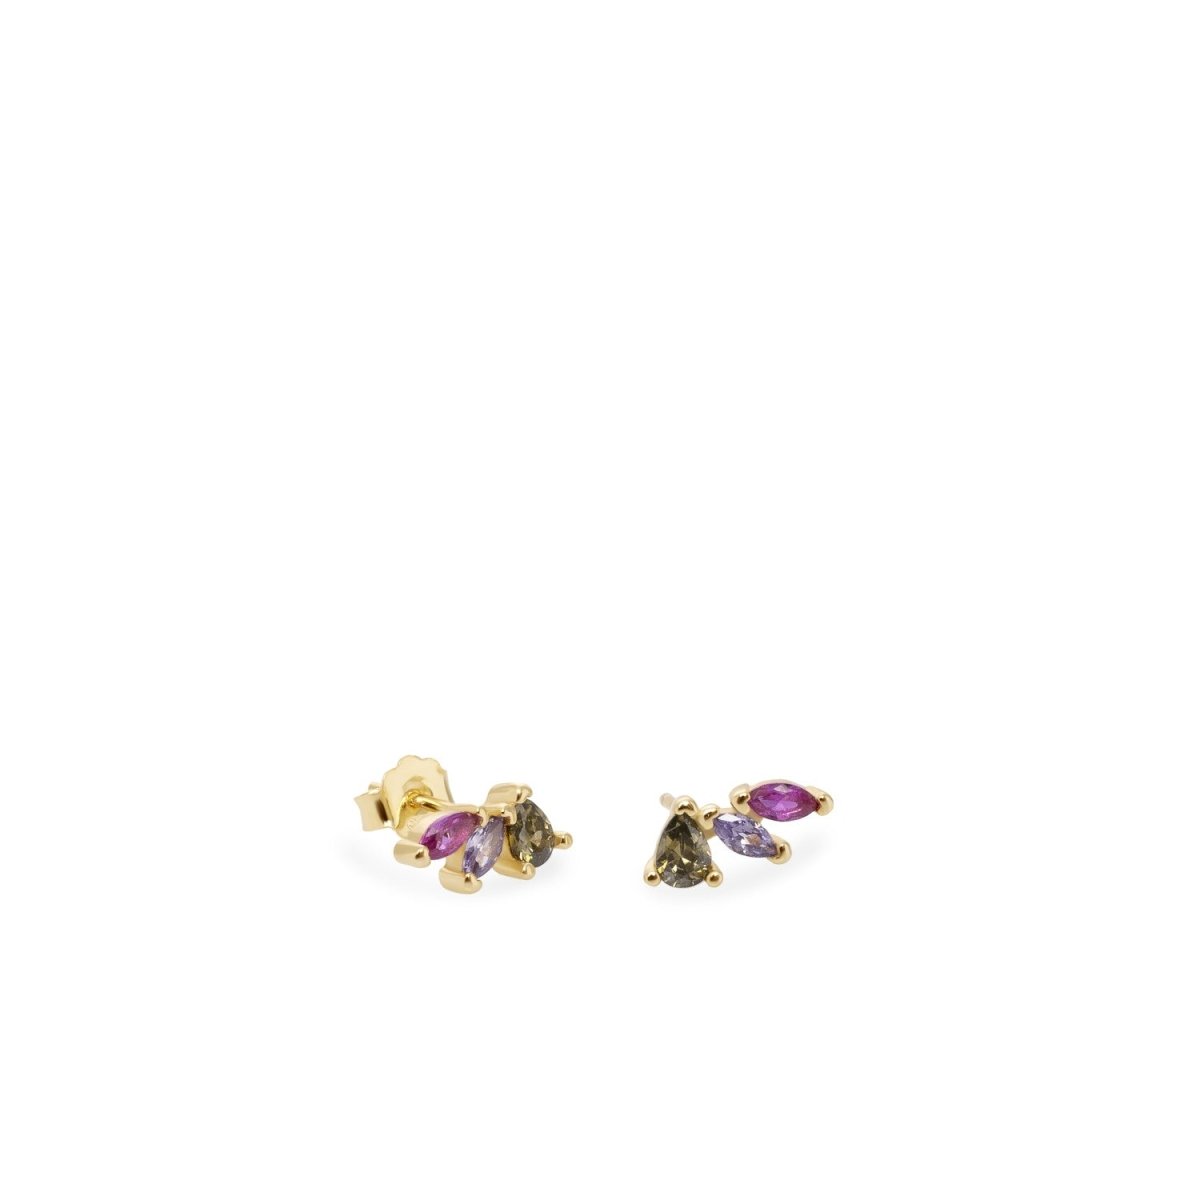 Earrings - Gold-plated tricolor design earrings